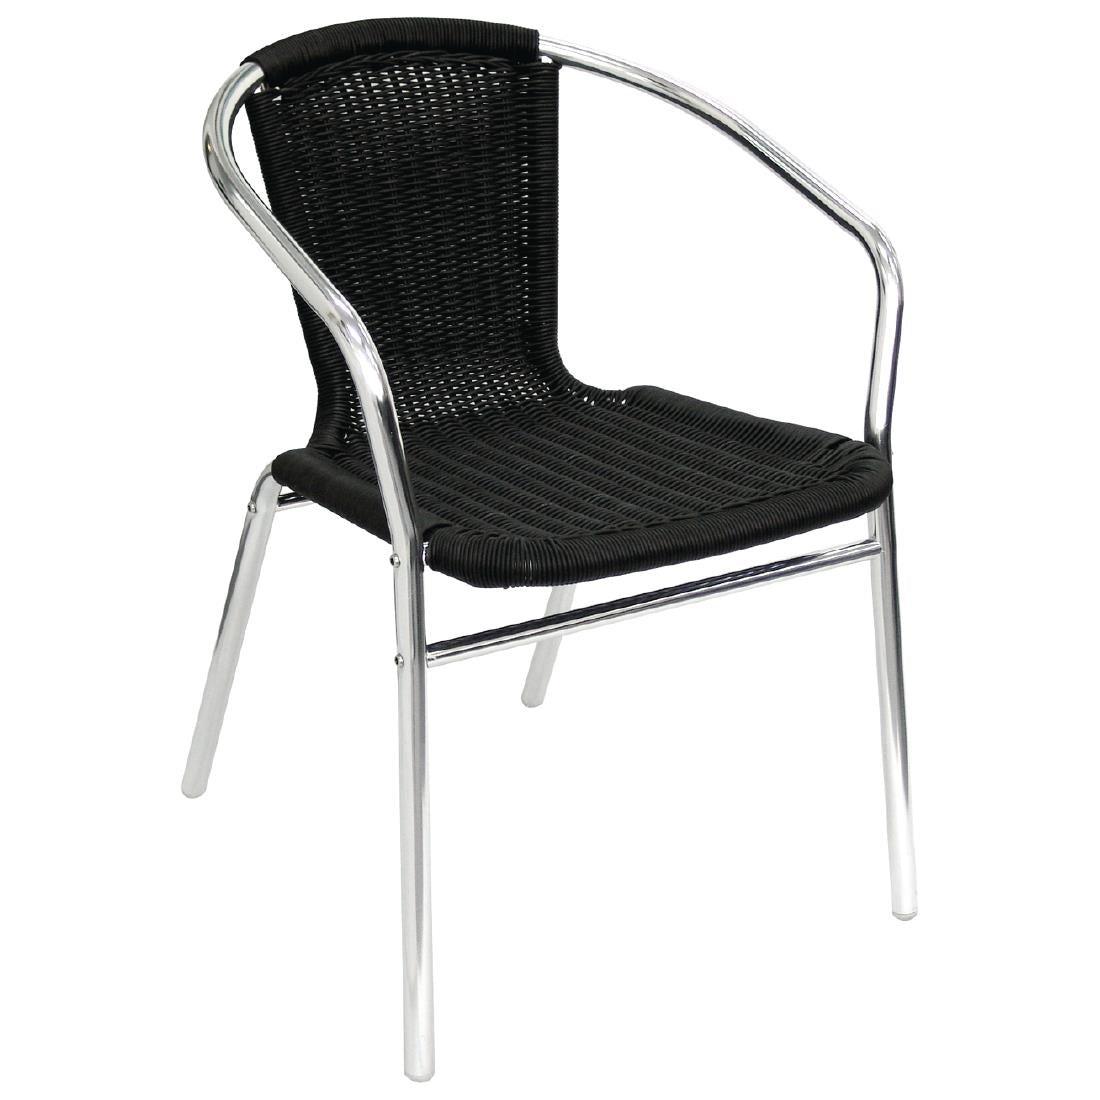 U507 - Bolero Wicker Chair with Aluminium Frame - Black Finish (Pack 4